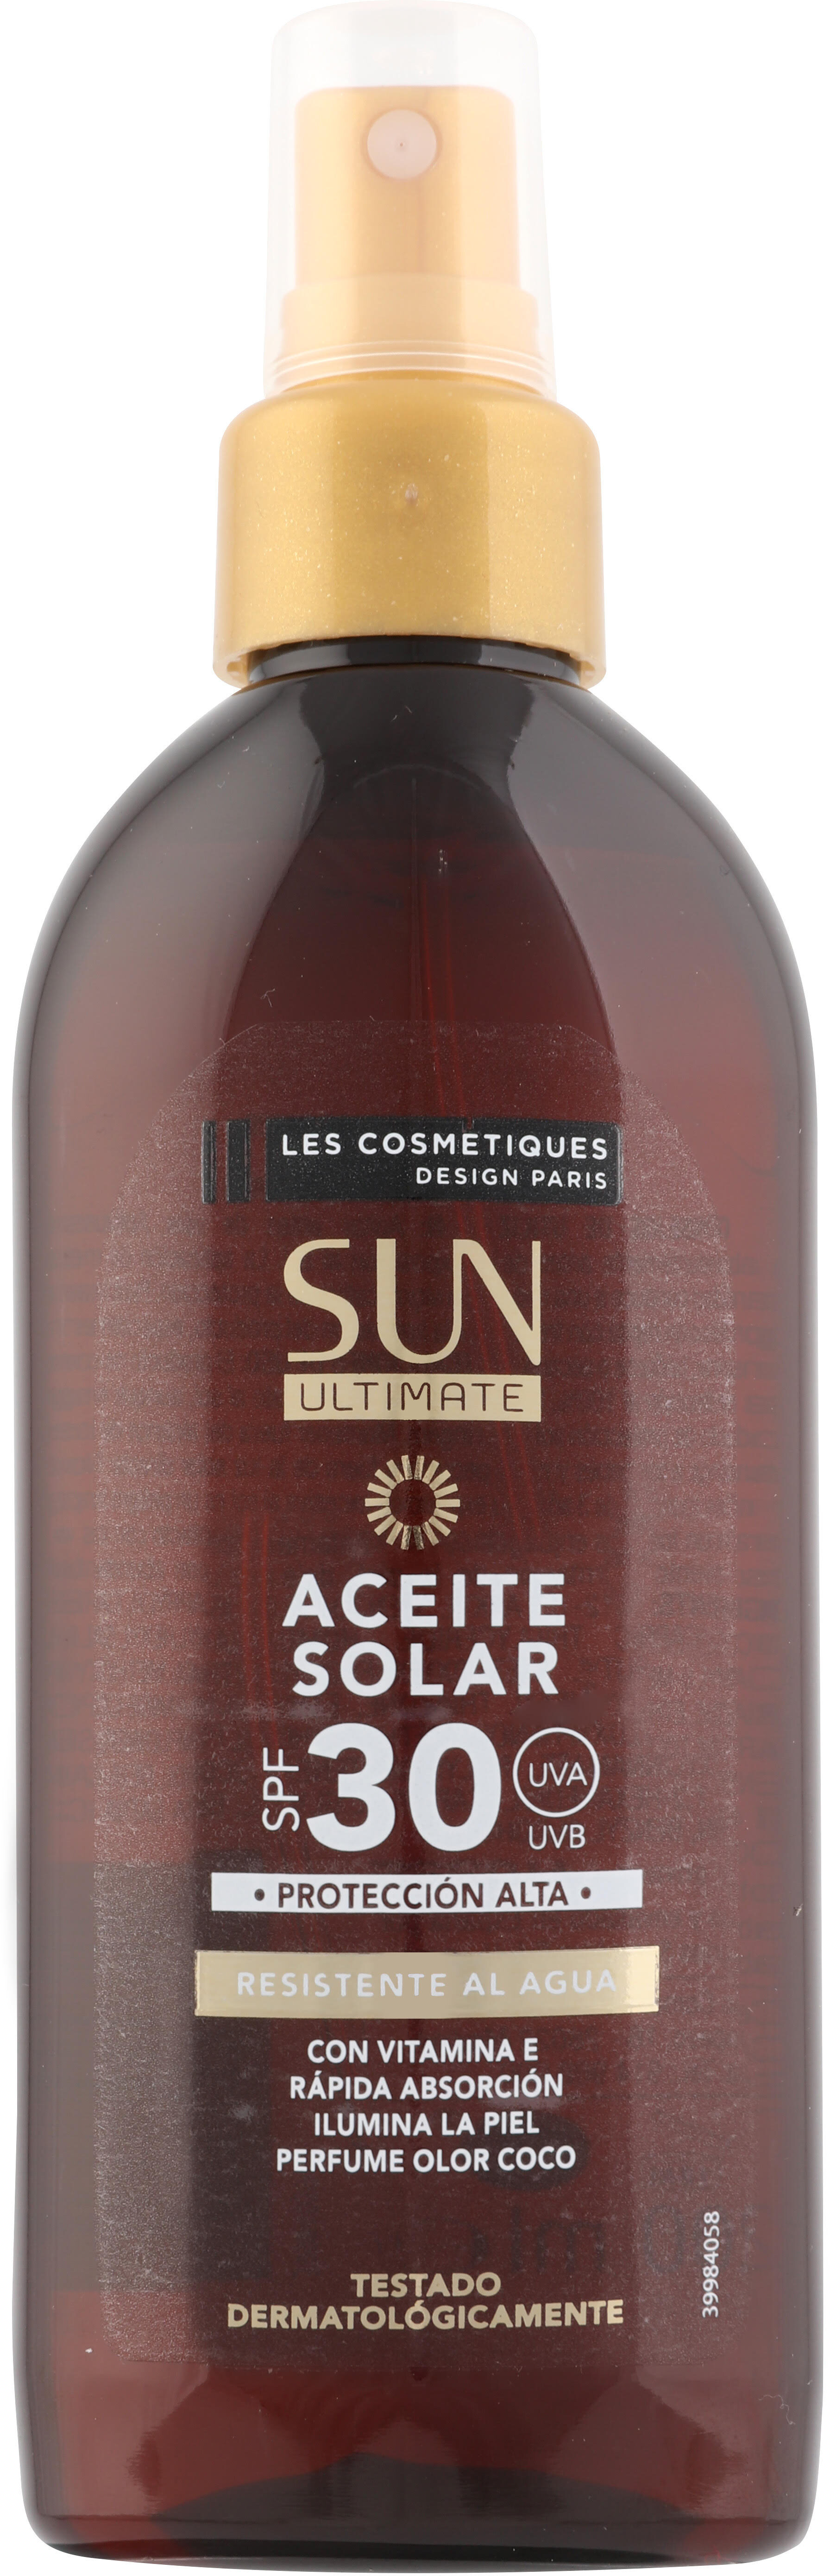 Aceite solar coco spf30 sun ultimate spray - Produit - es